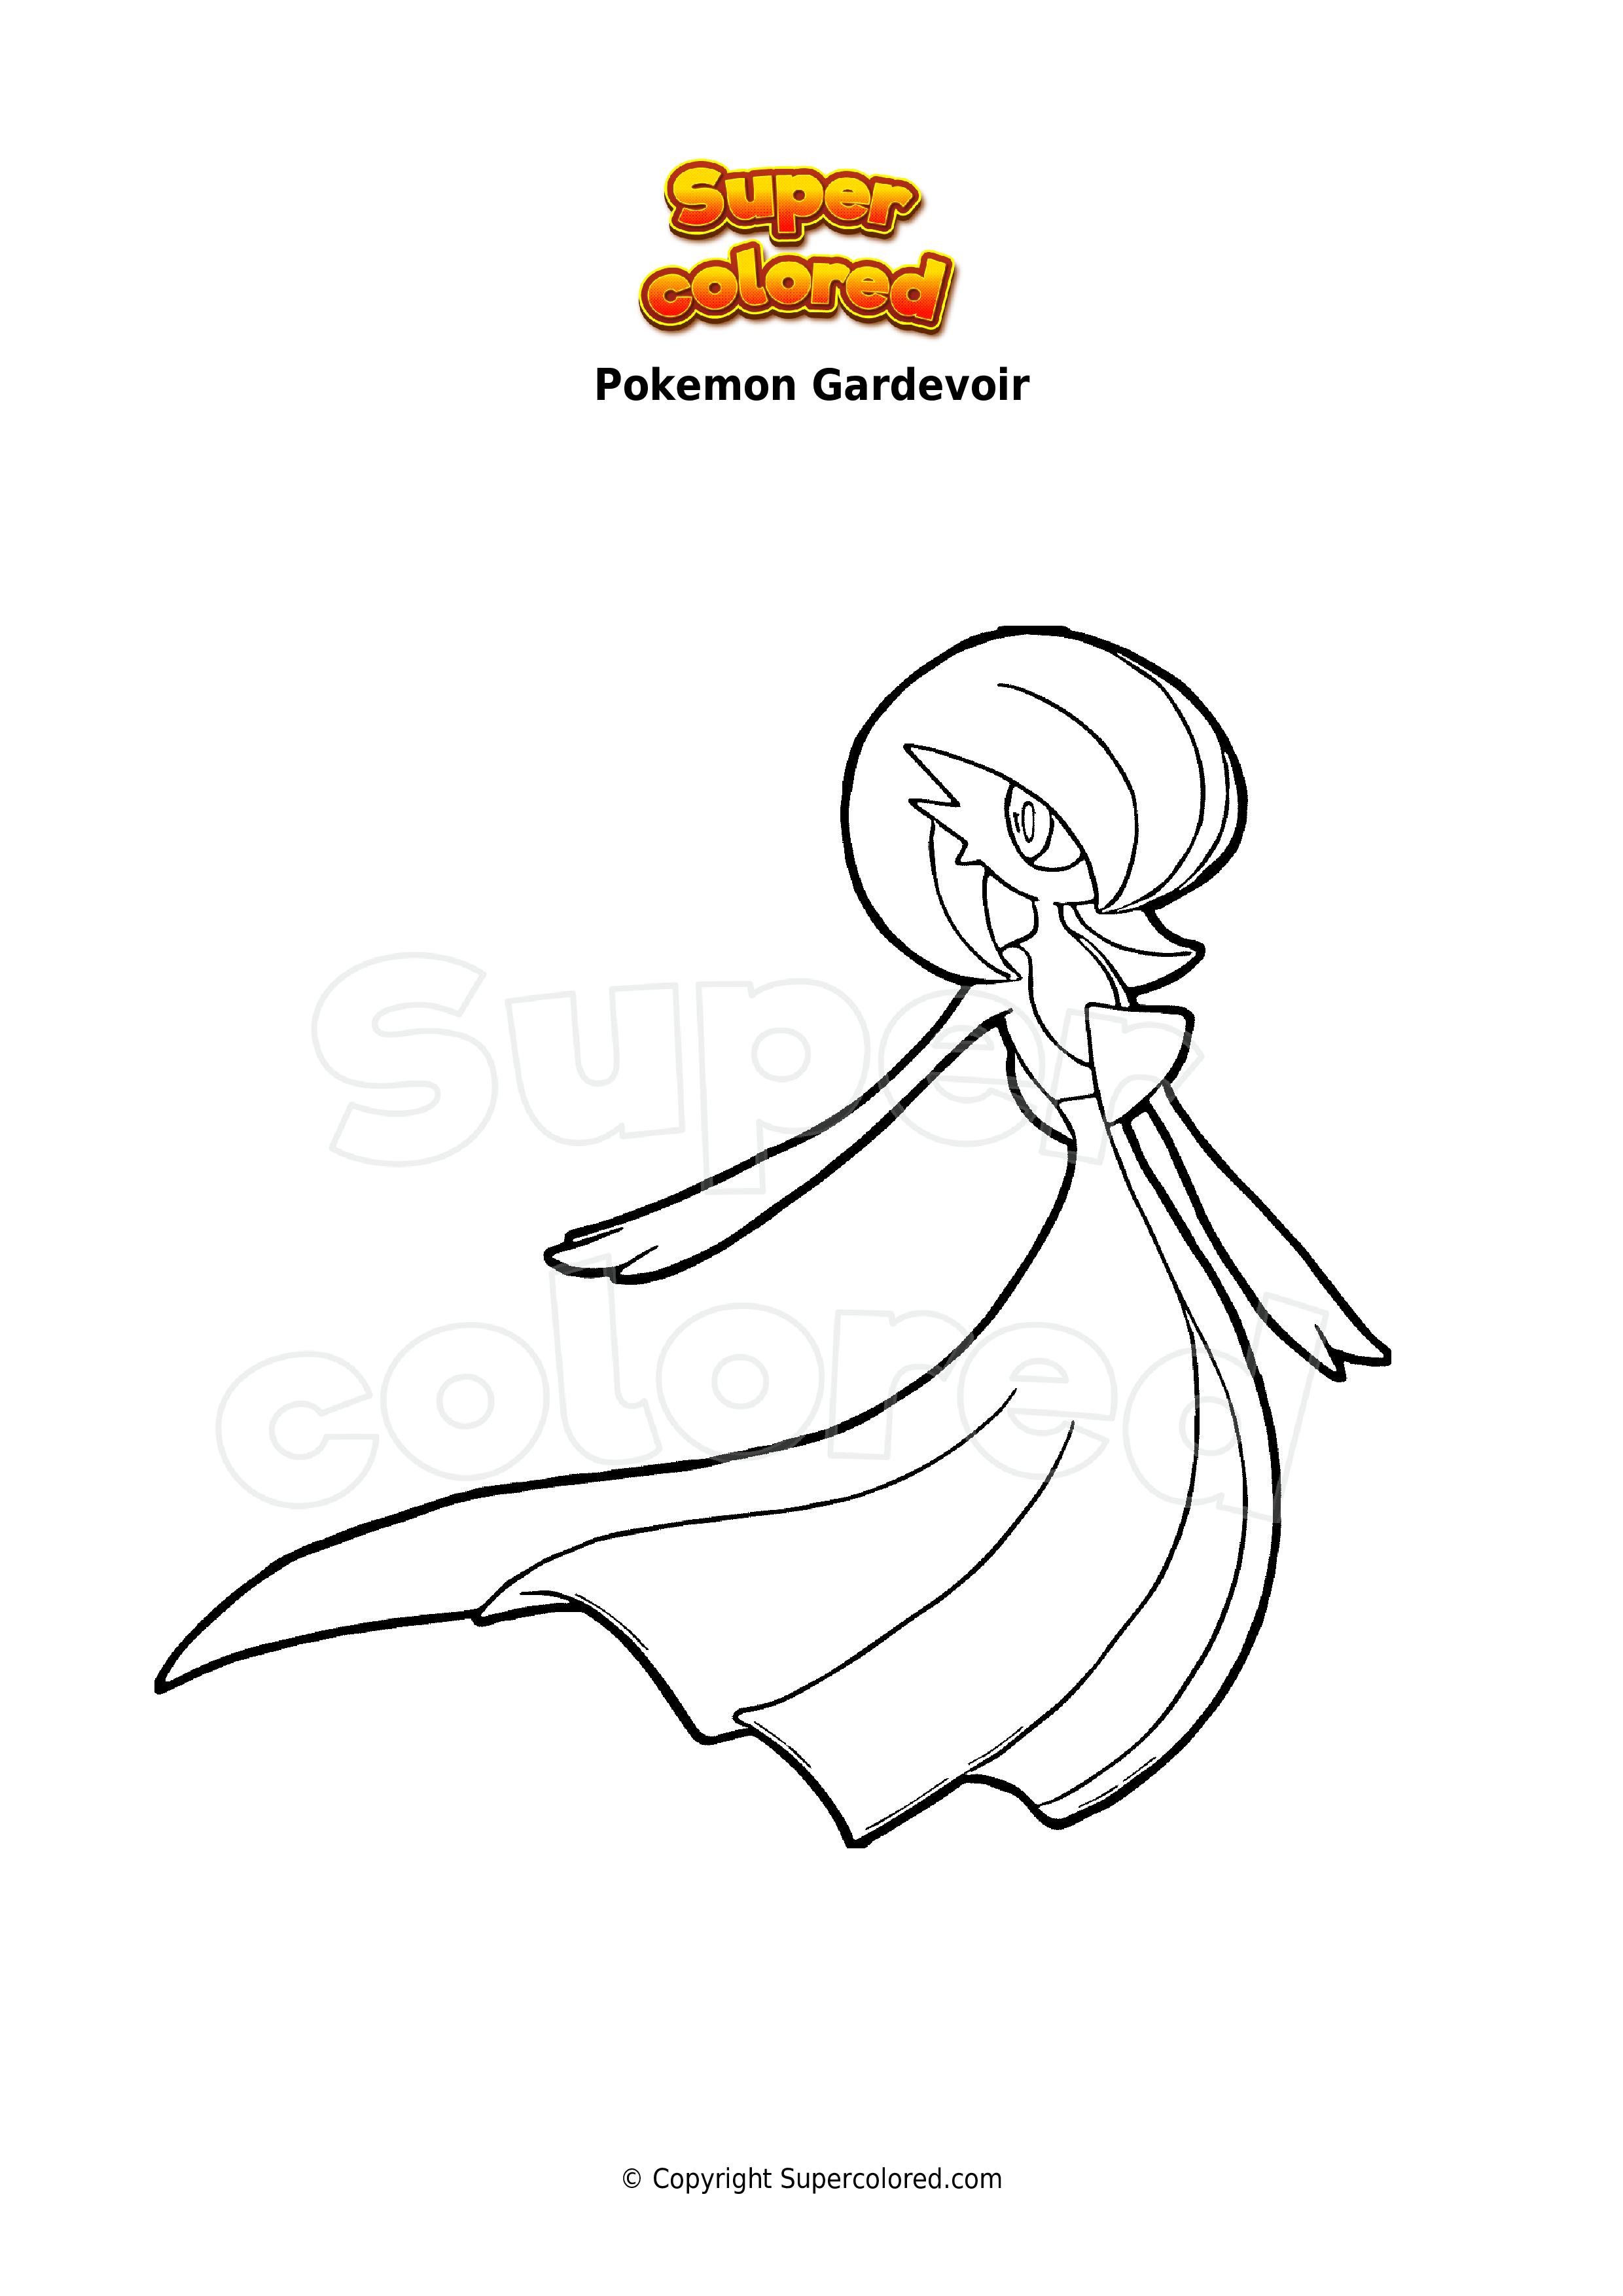 Coloring page Pokemon Gardevoir - Supercolored.com